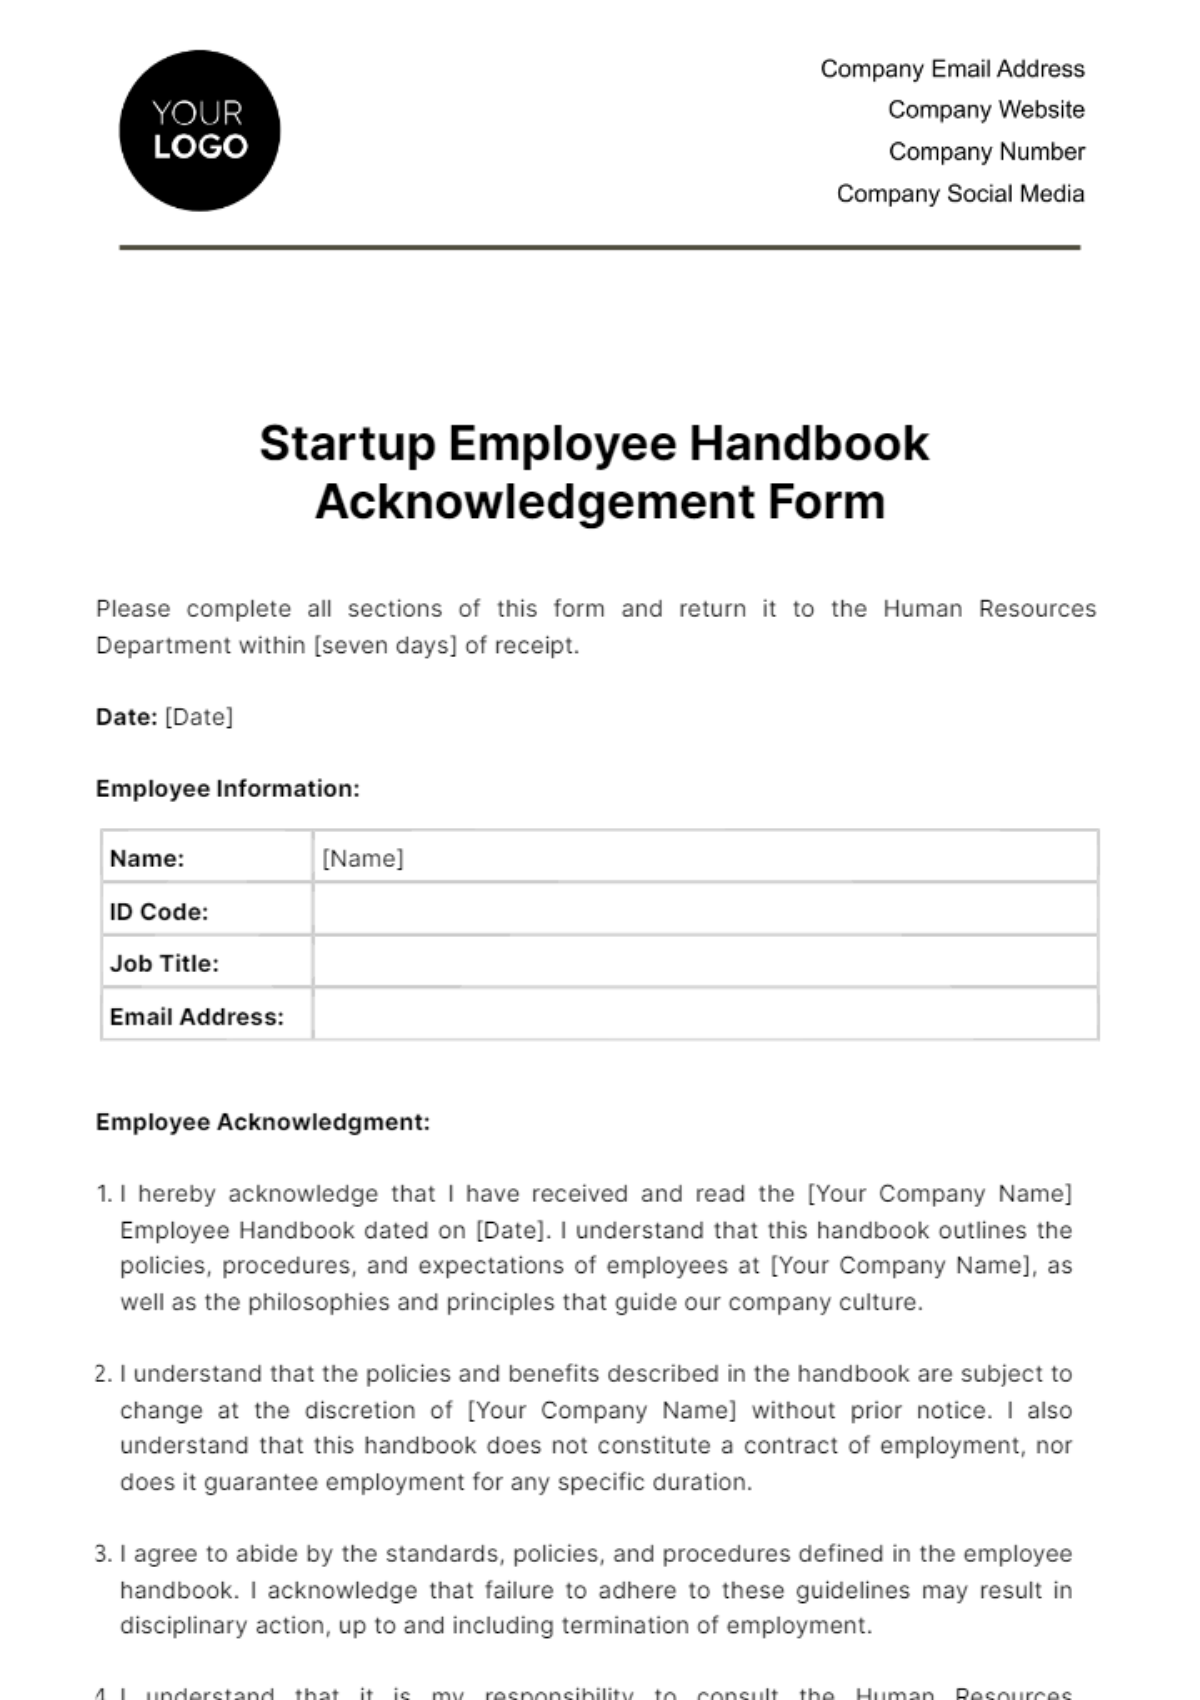 Free Startup Employee Handbook Acknowledgment Form Template